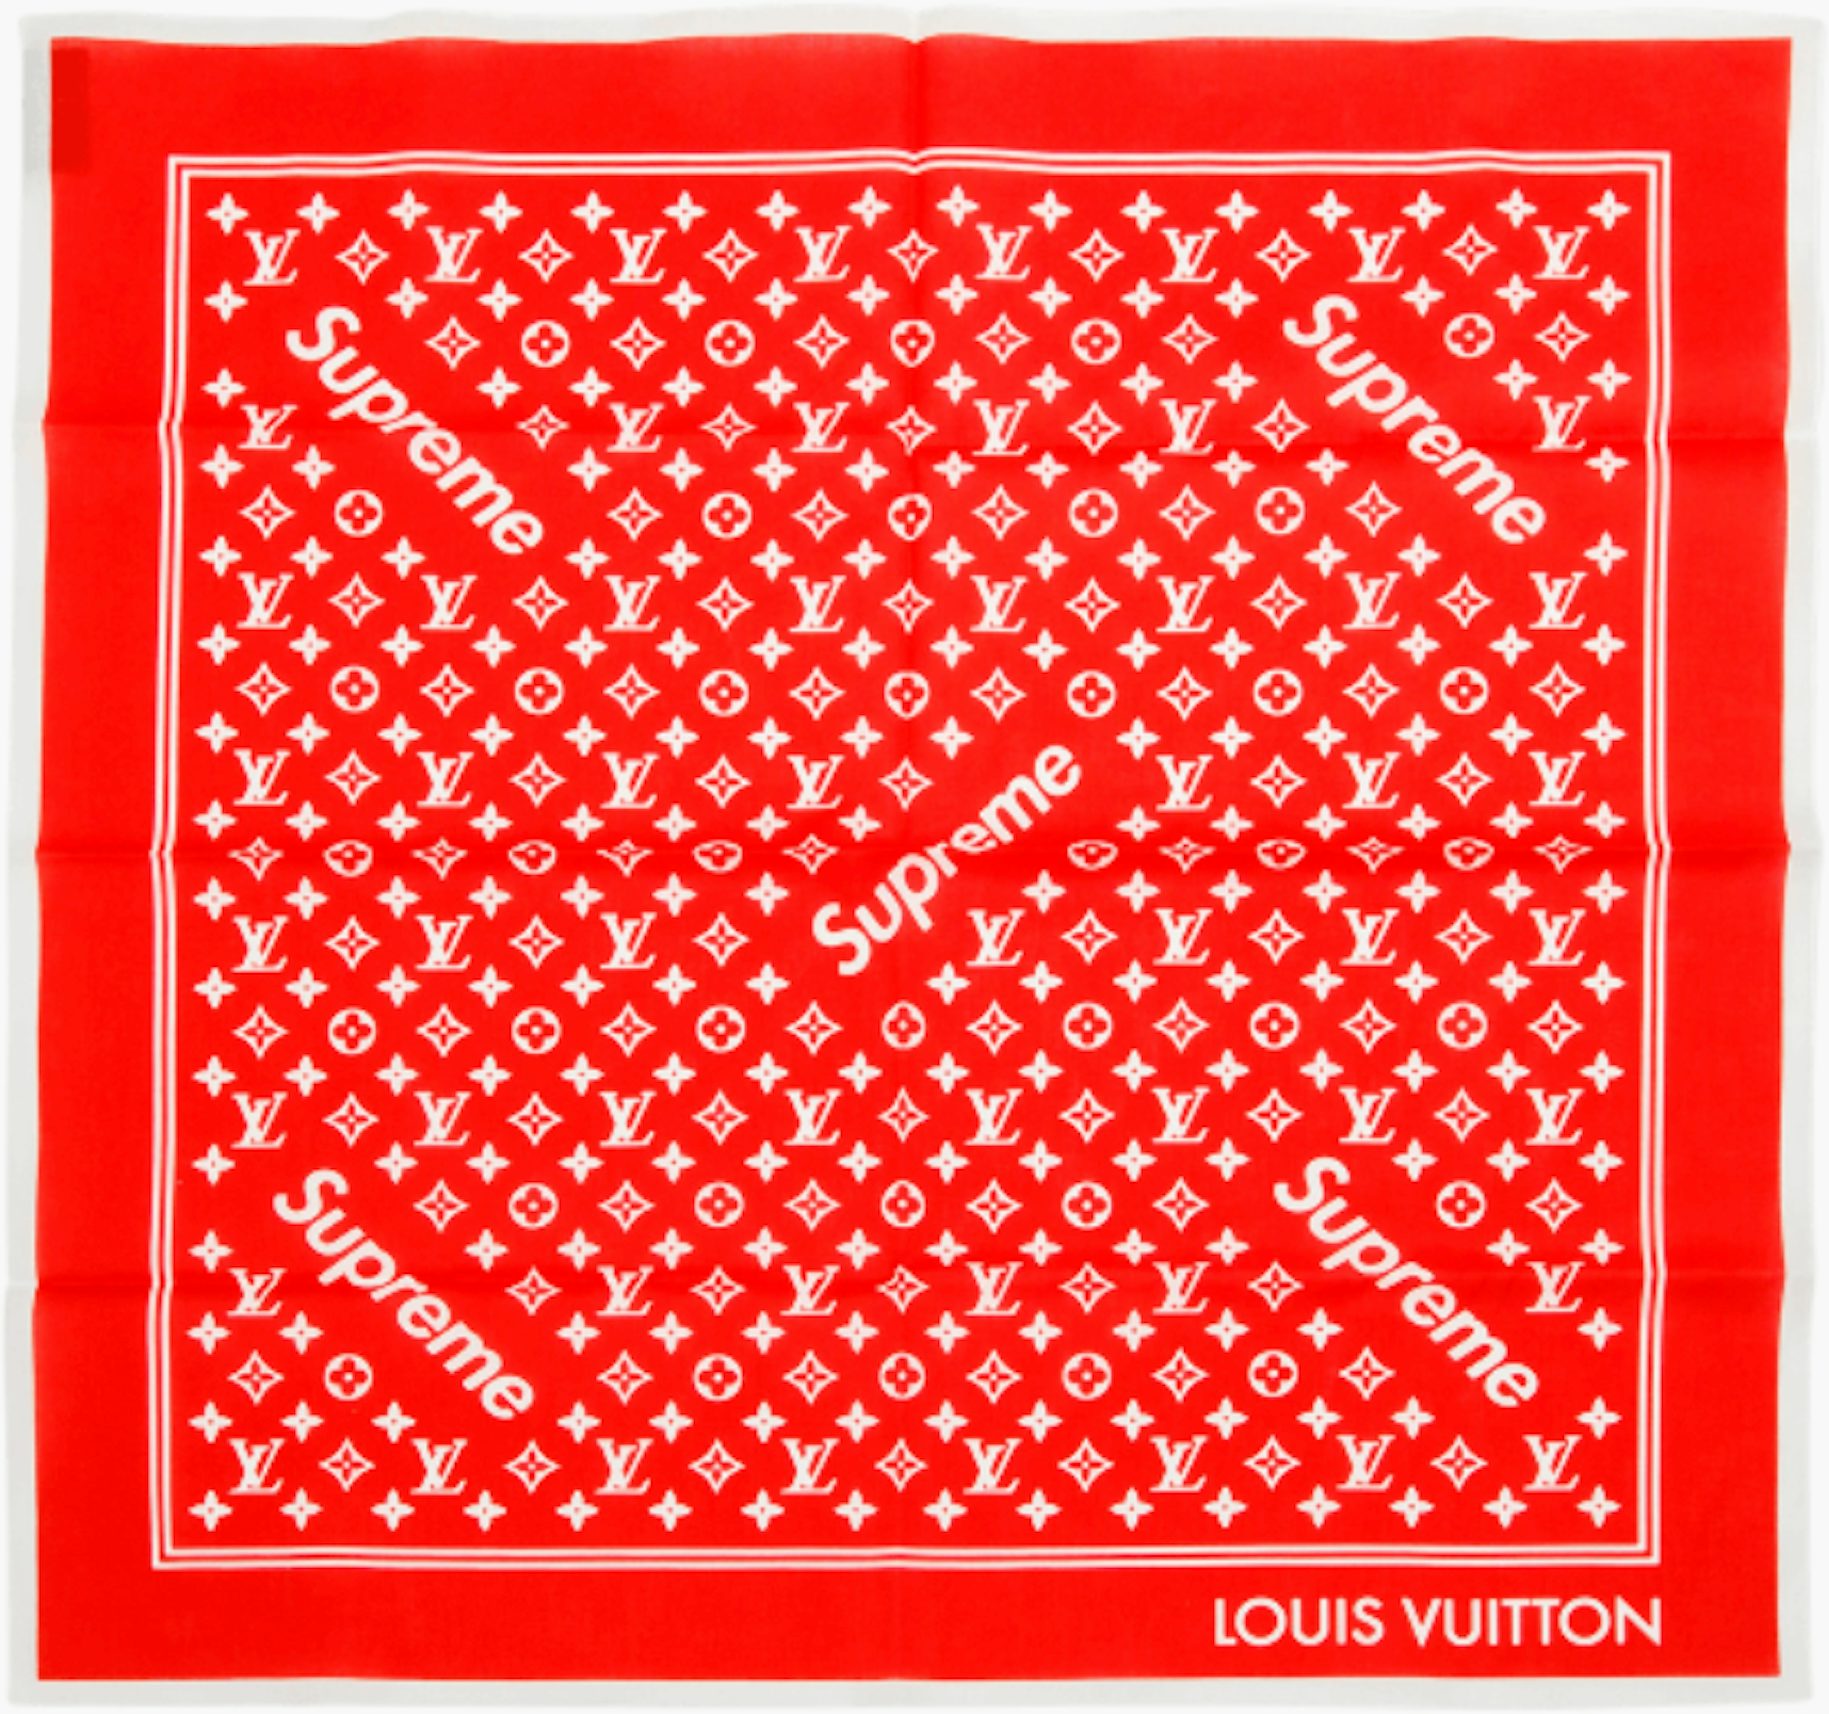 Louis Vuitton Monogram Bandana Shorts Indigo/White